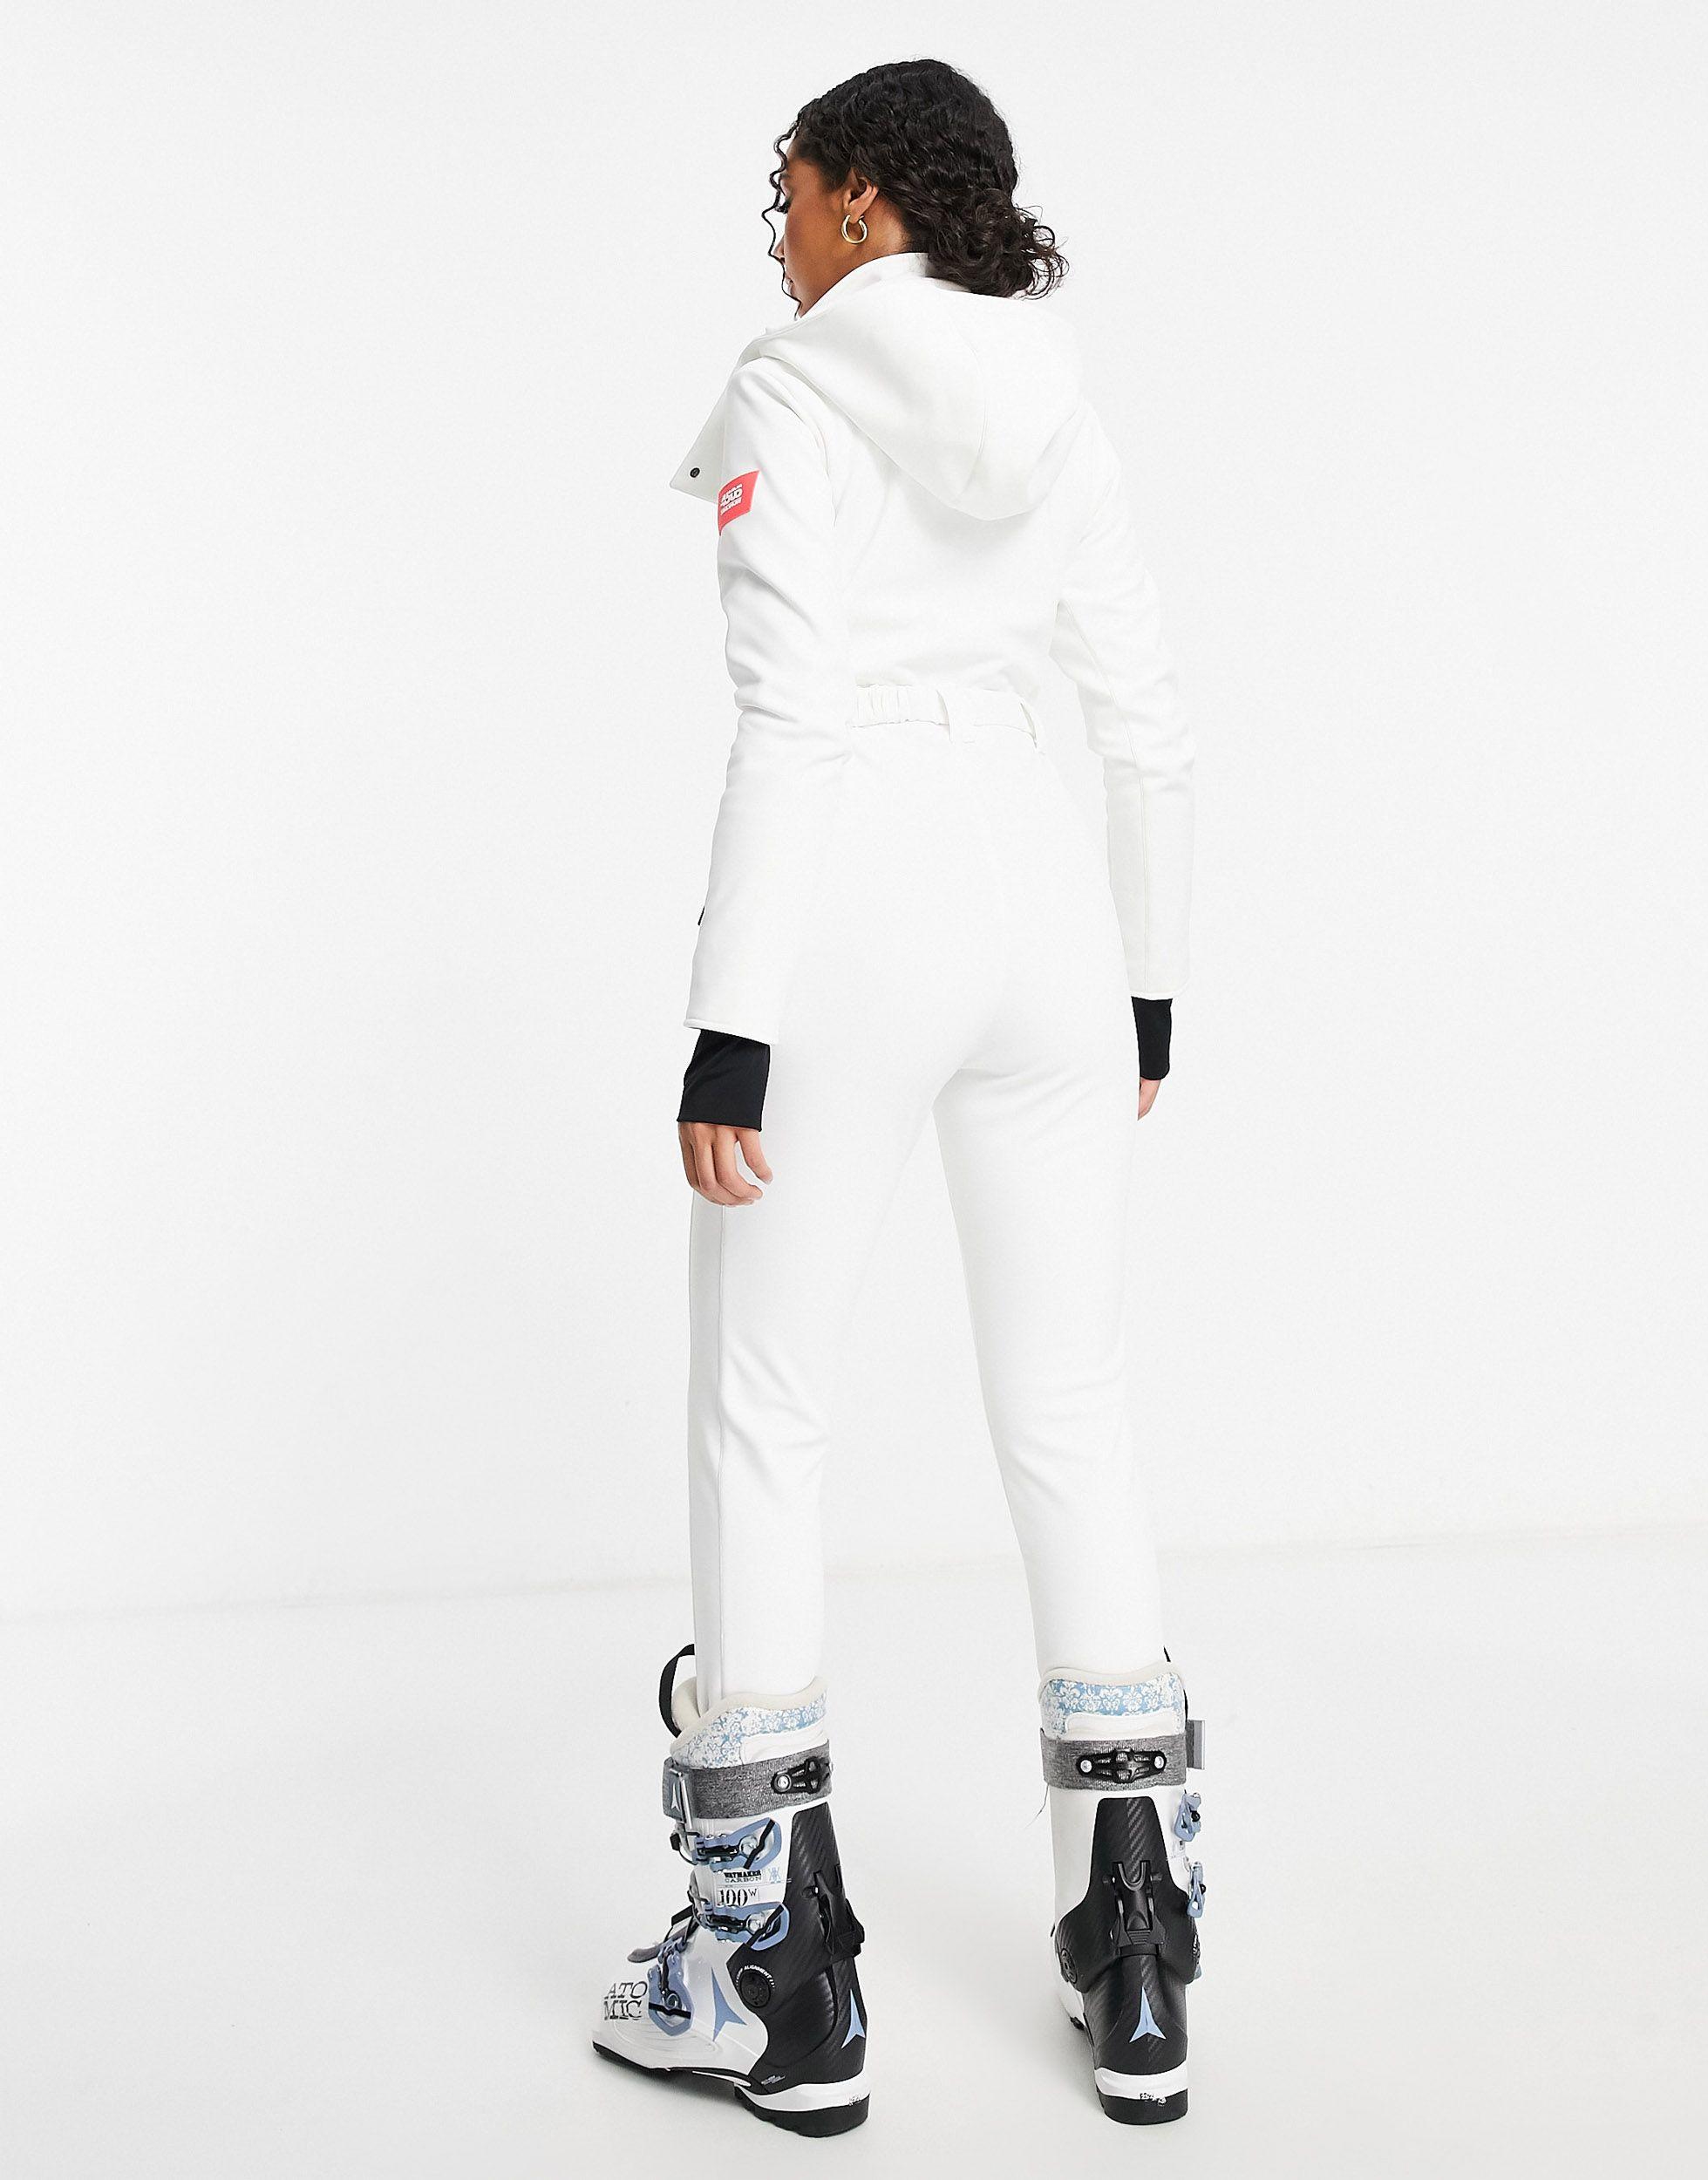 ASOS 4505 Ski Suit with Retro Geo Print Detail